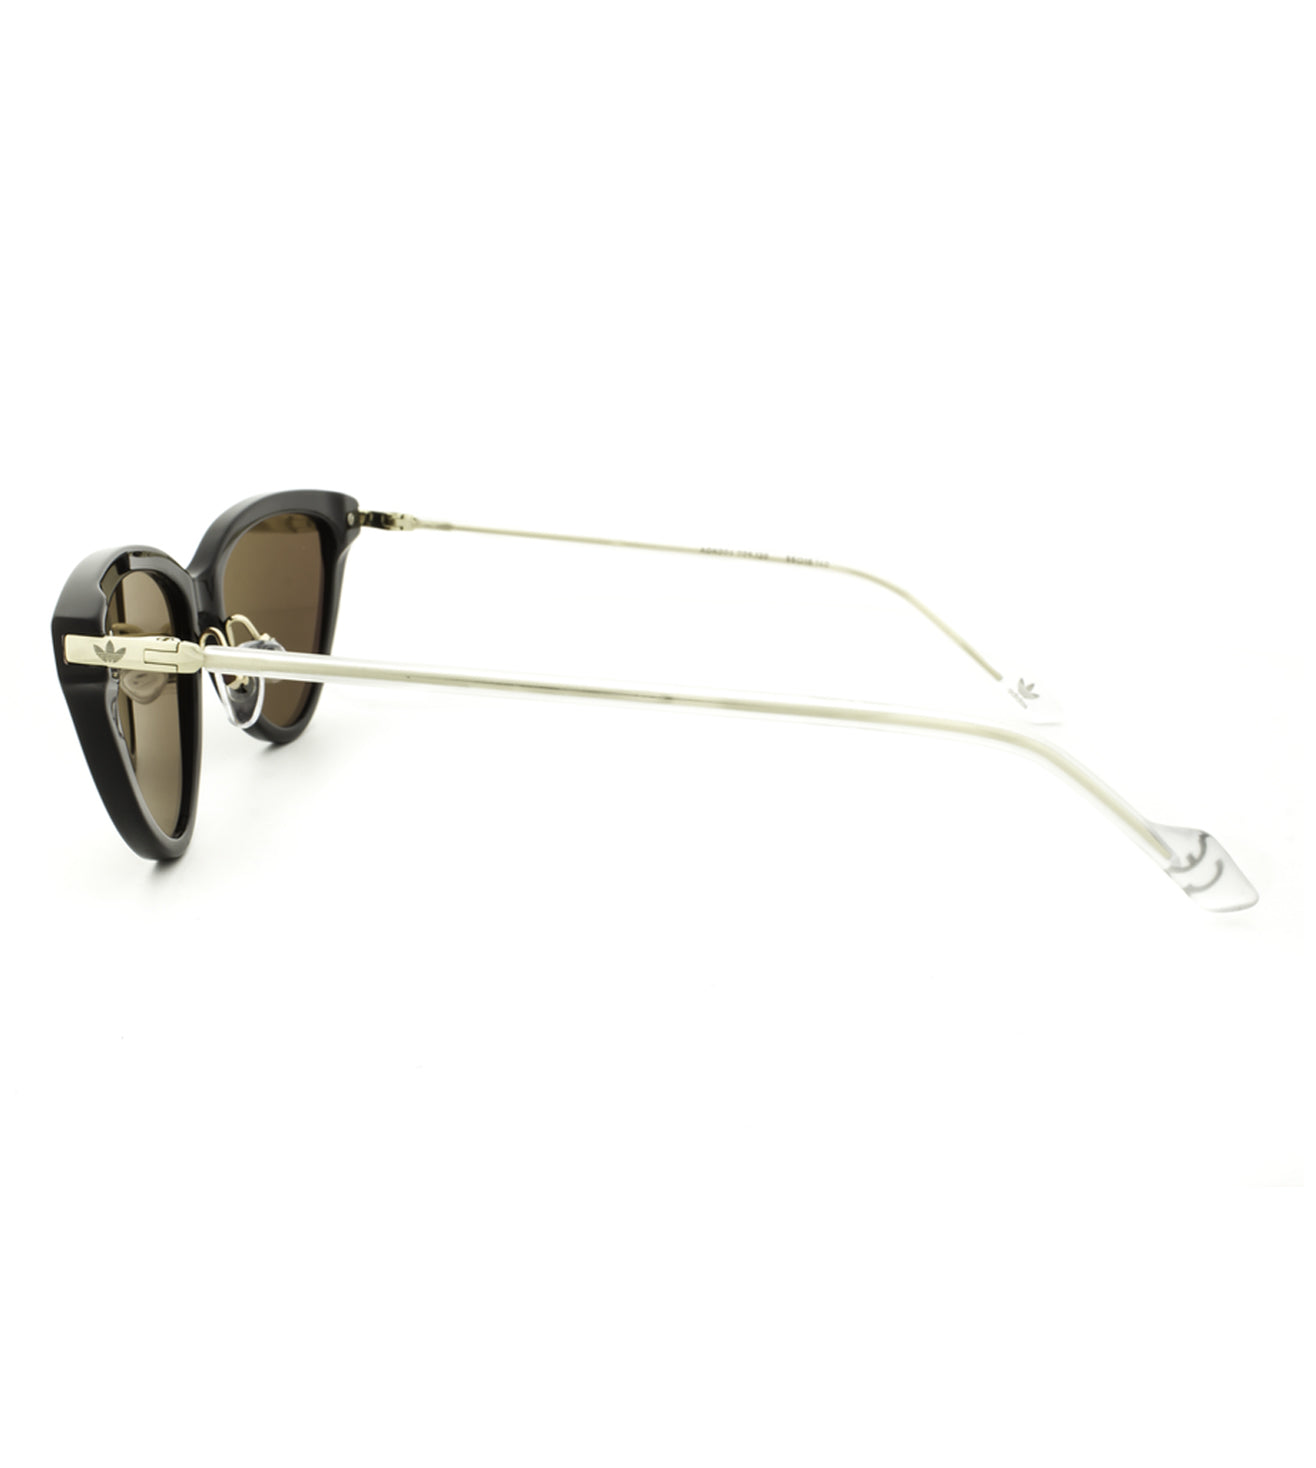 Adidas Originals Women's Brown Cat-eye Sunglasses